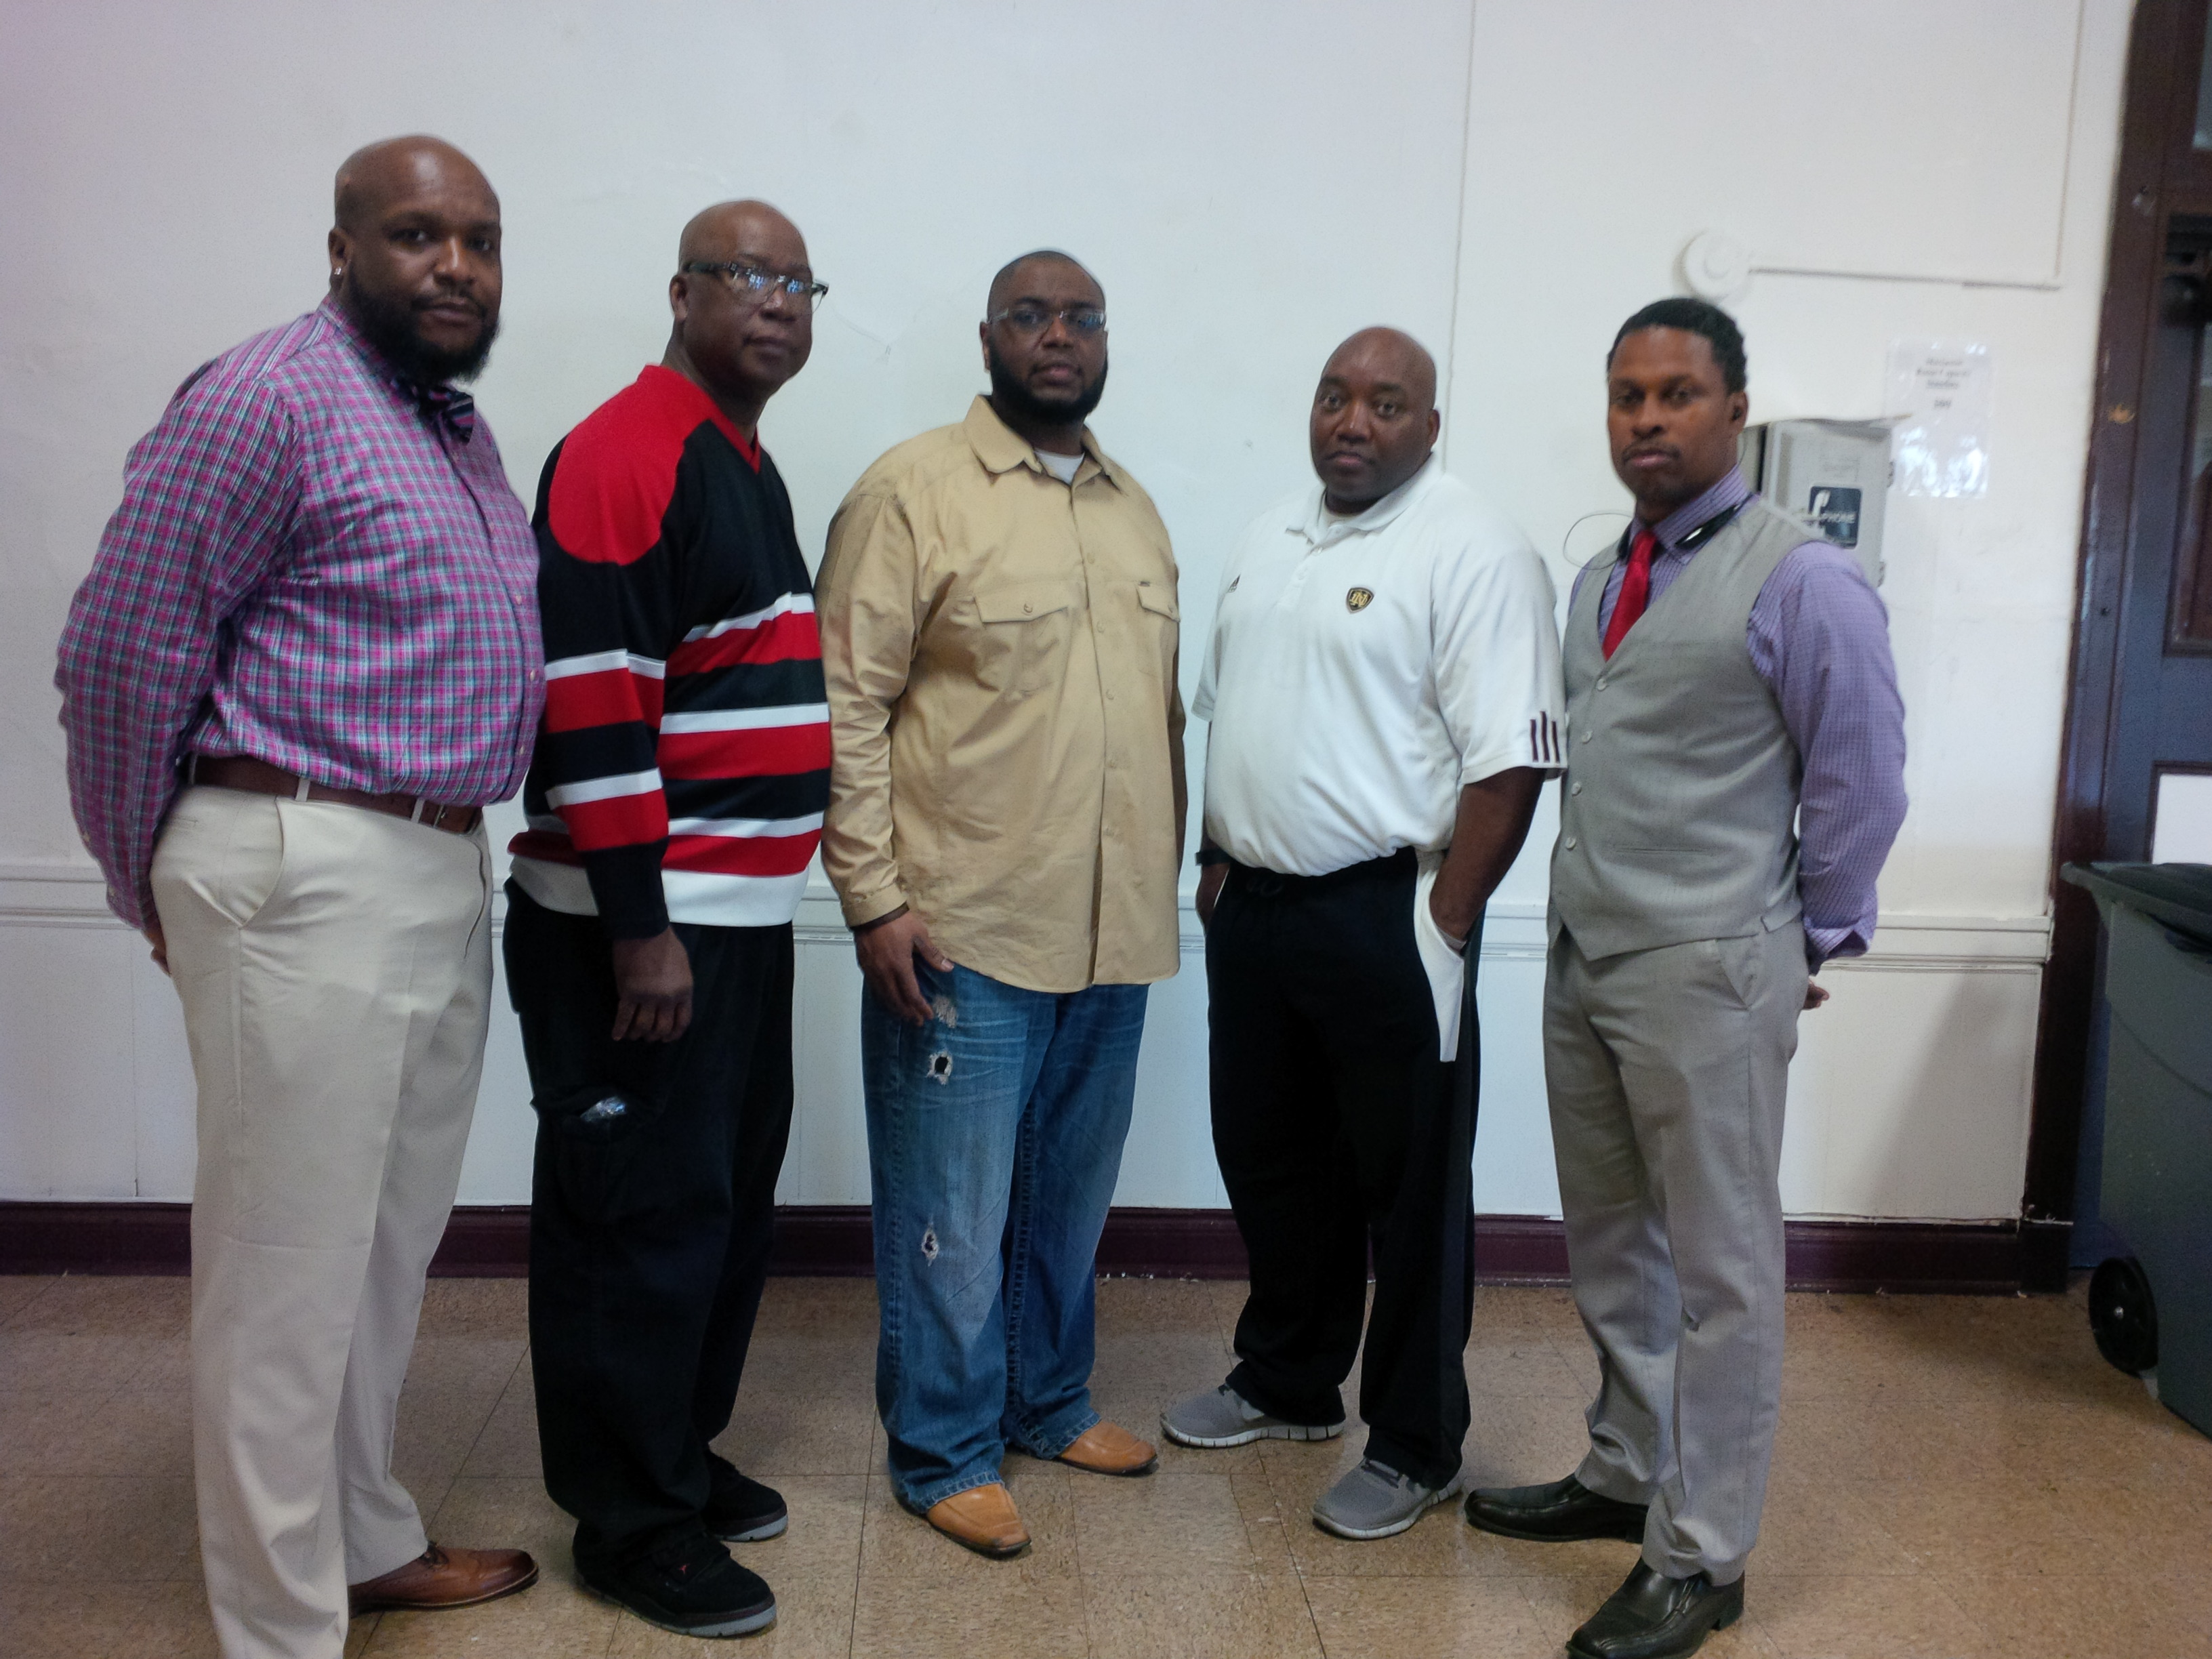 Five guys: (from left): Keith Martin, Sr., Stanley Muhammad, Mack McGhee, William C. Gray, Jr., Lamont Brown